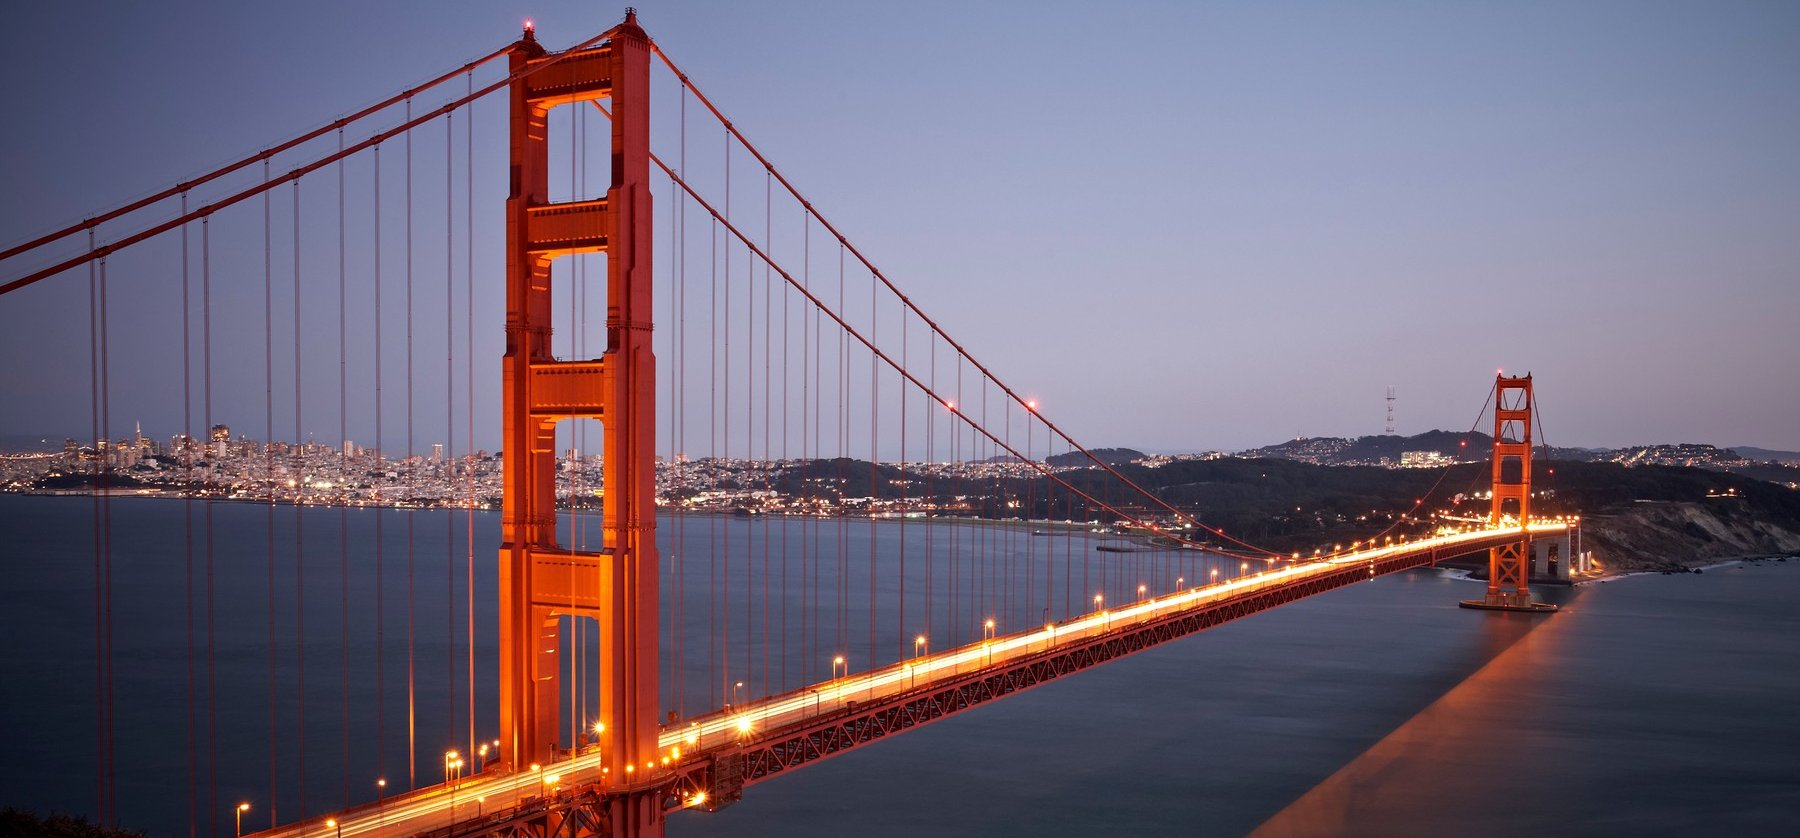 84 éves a Golden Gate híd!